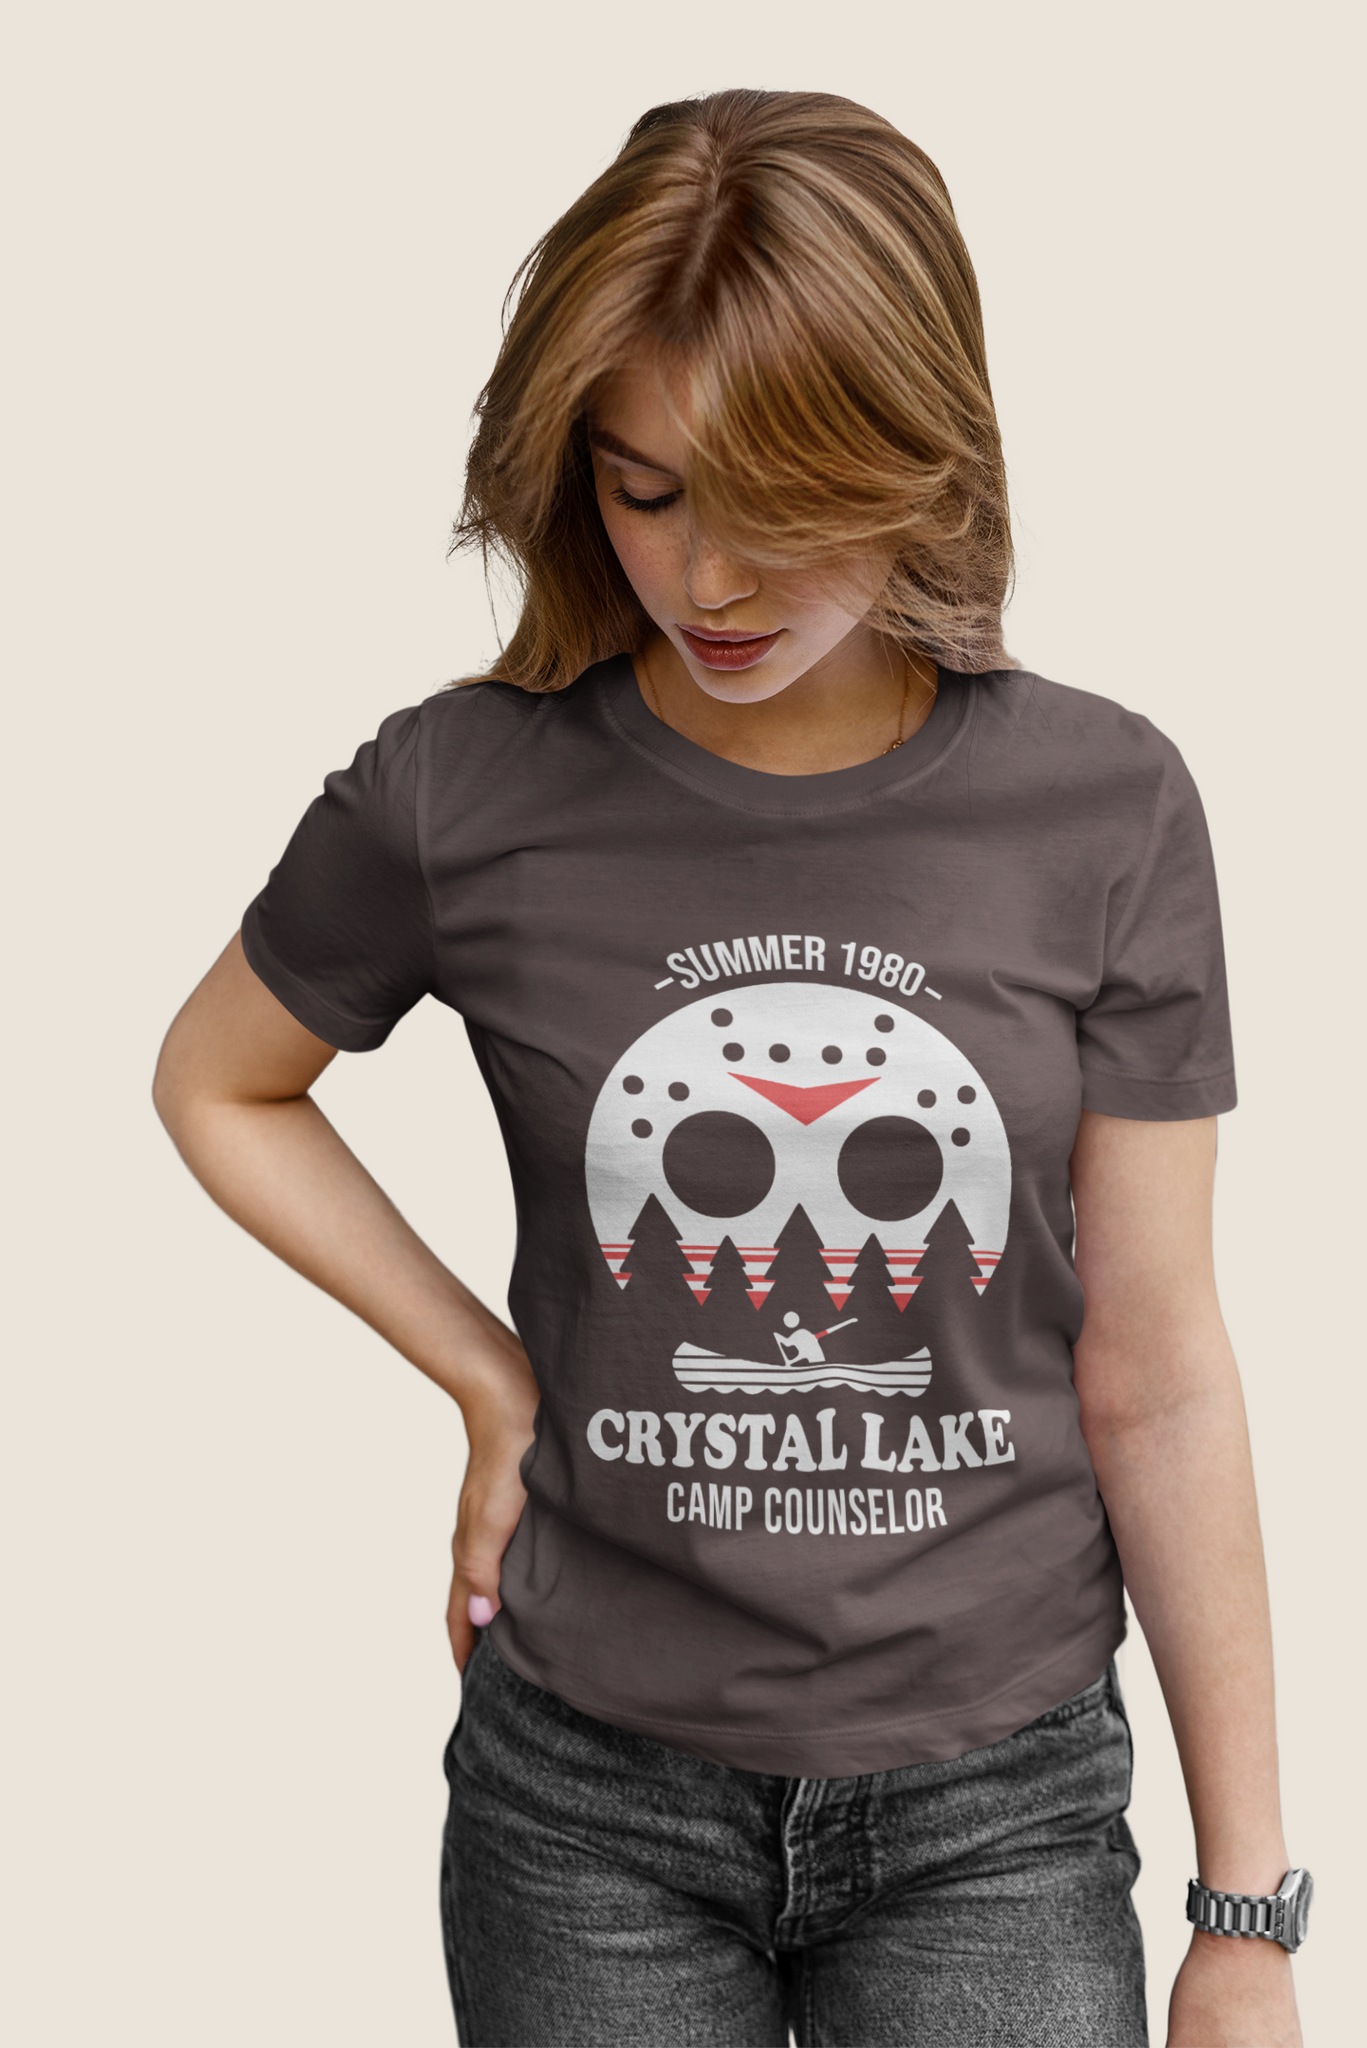 Friday 13th T Shirt, Summer 1980 Crystal Lak Camp Counselor Tshirt, Jason Voorhees T Shirt, Halloween Gifts